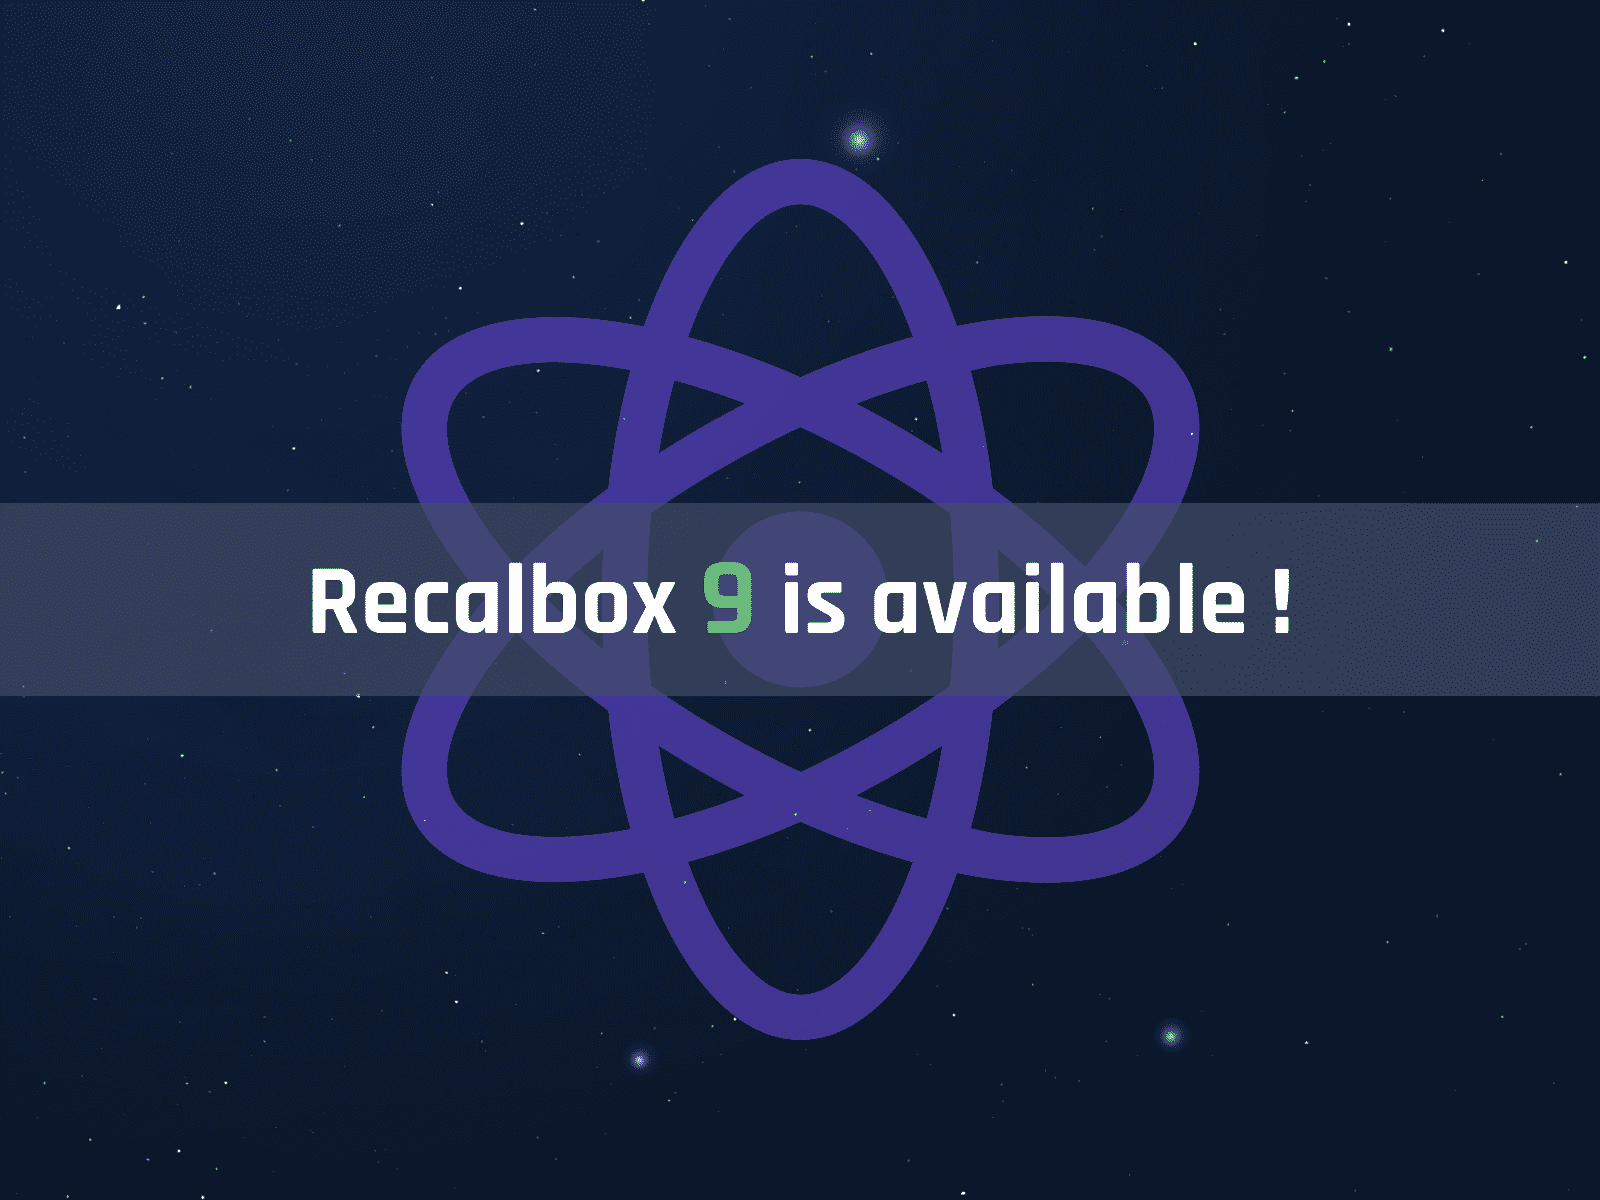 Console Retrogaming Hutopi et Recalbox officielle – Retro Space